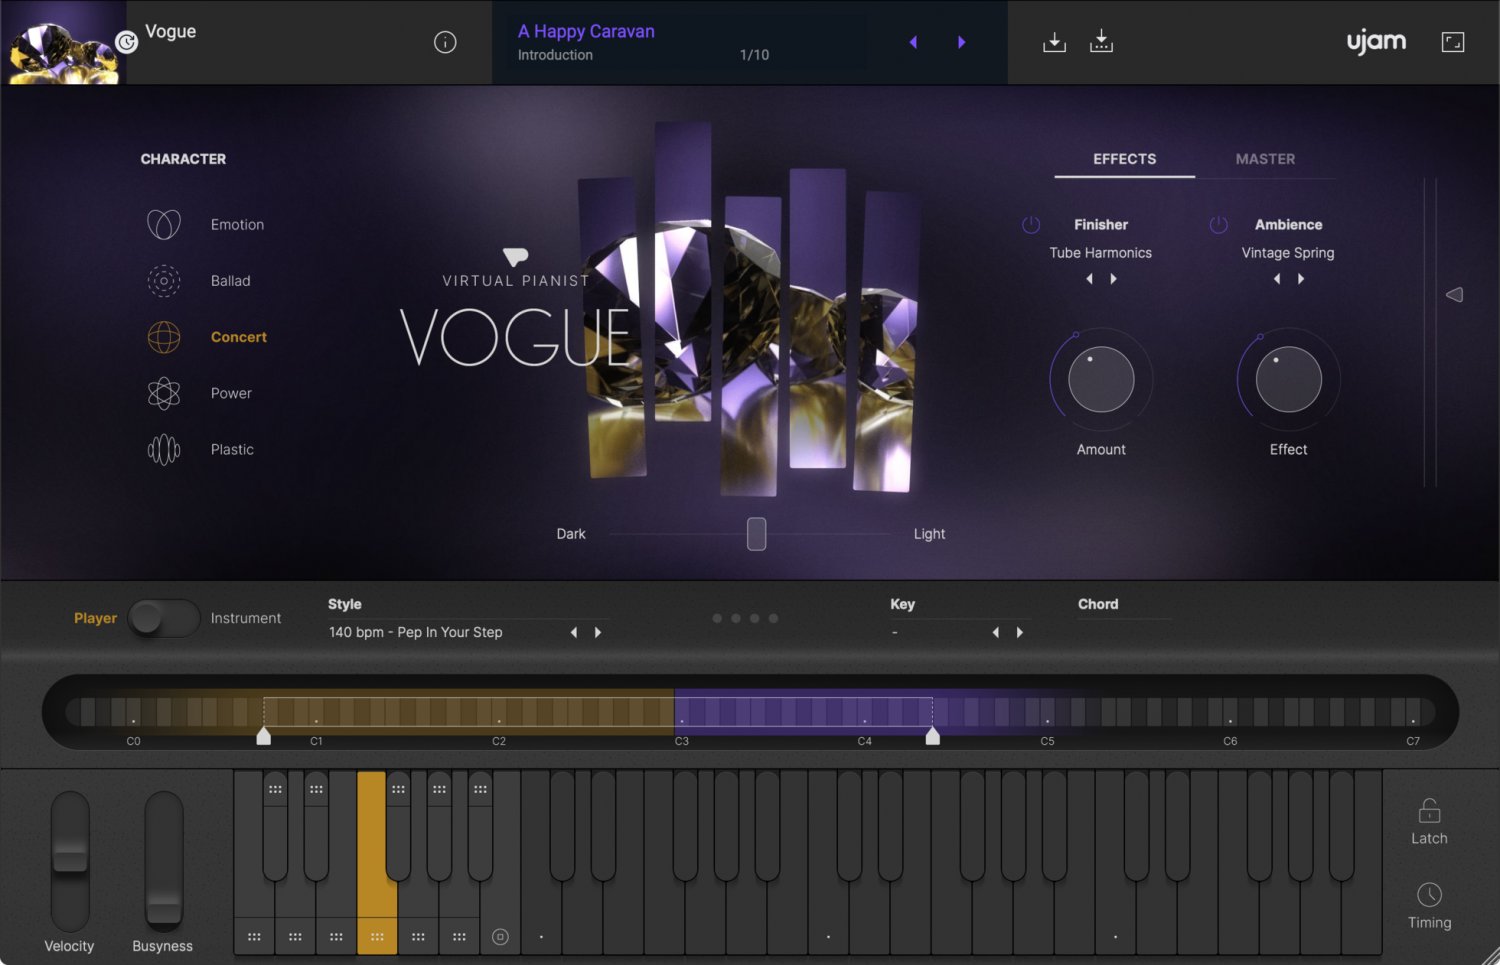 uJam - Virtual Pianist Vogue